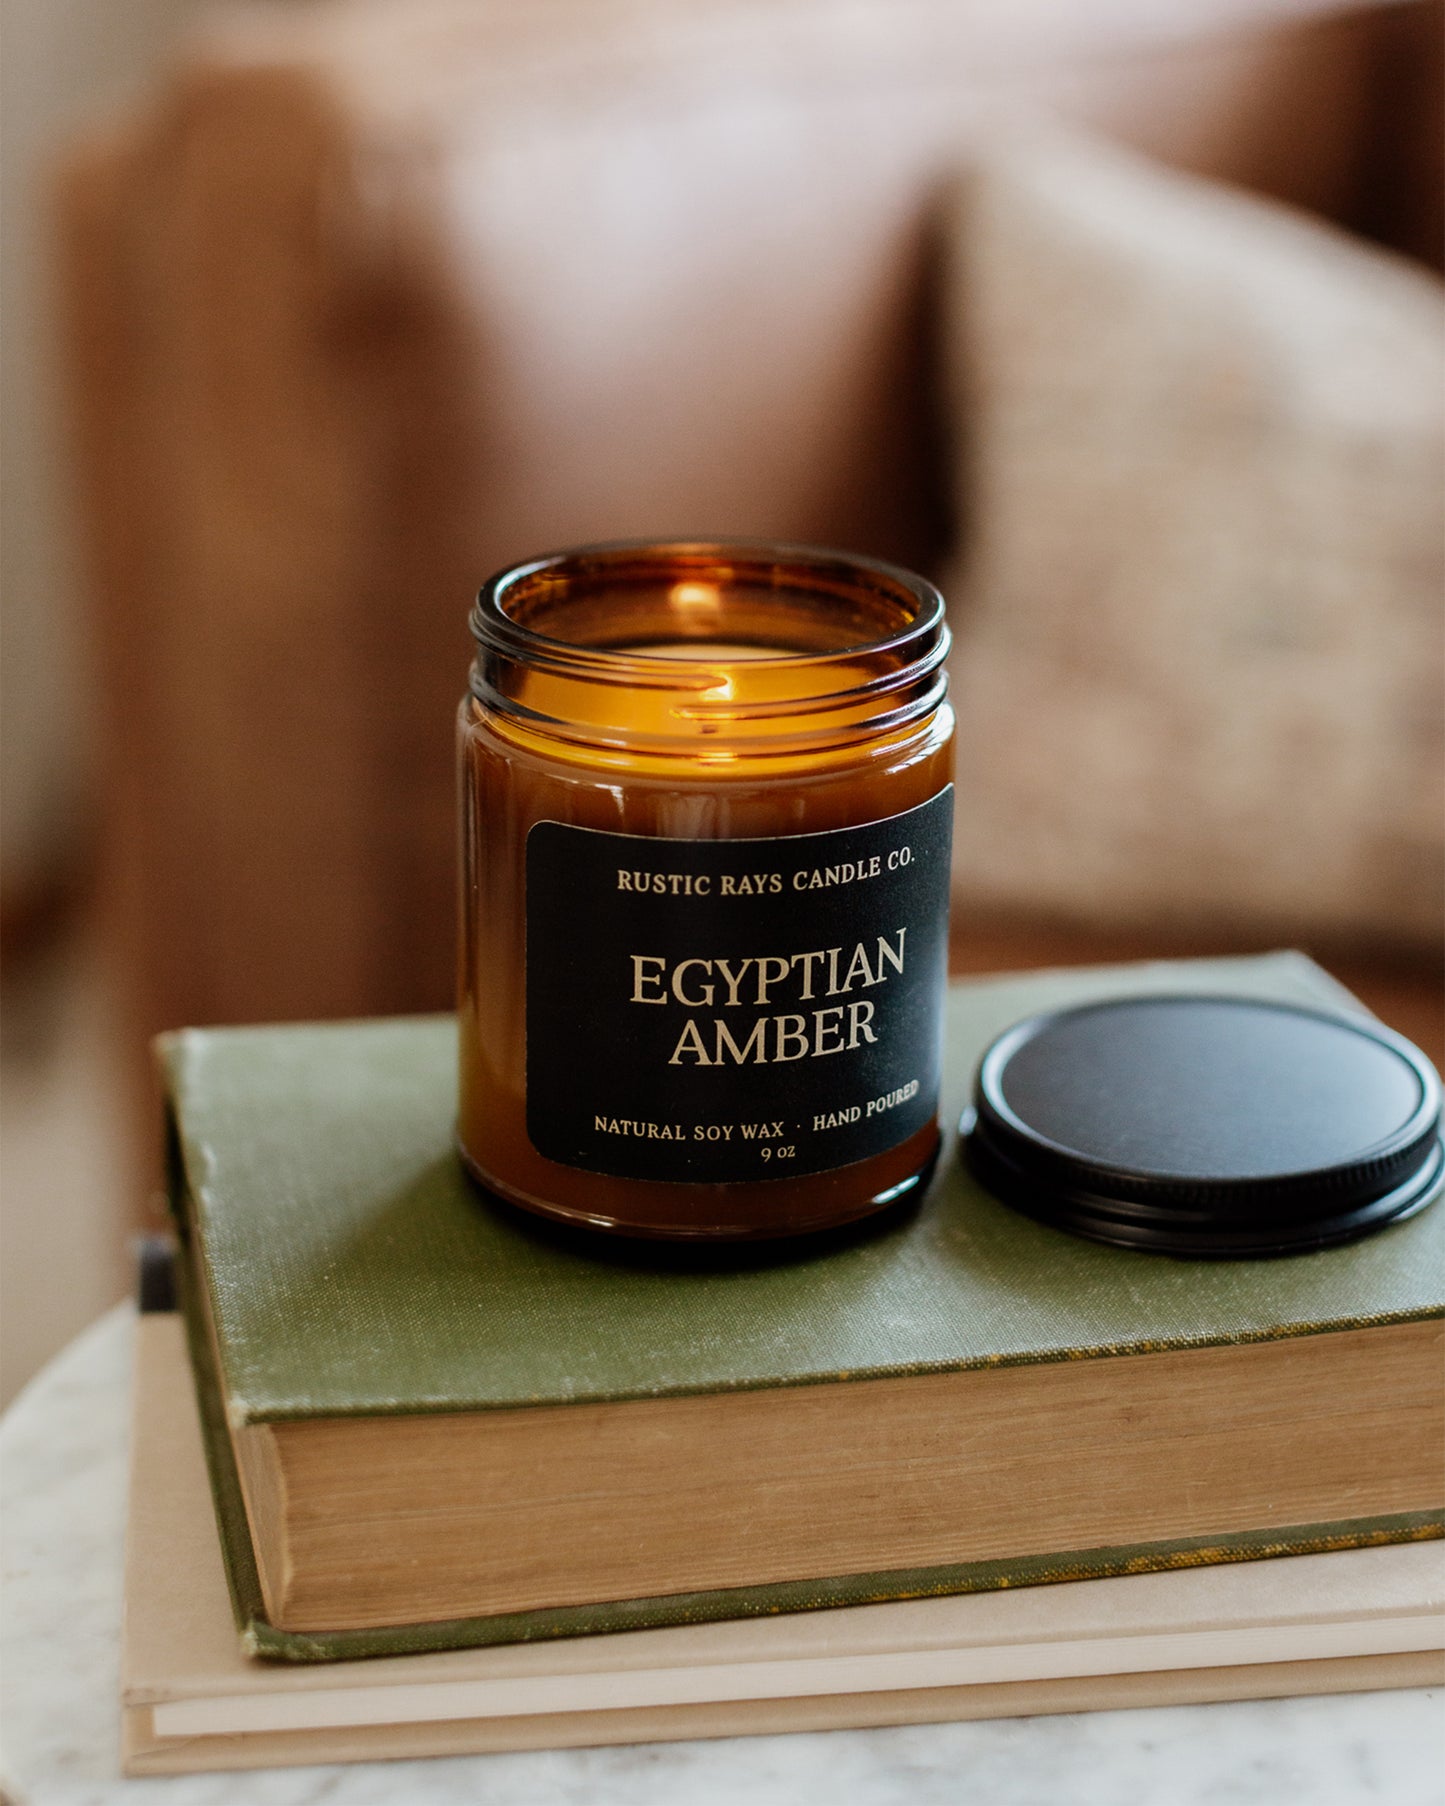 - Egyptian Amber | 9 oz Amber Jar